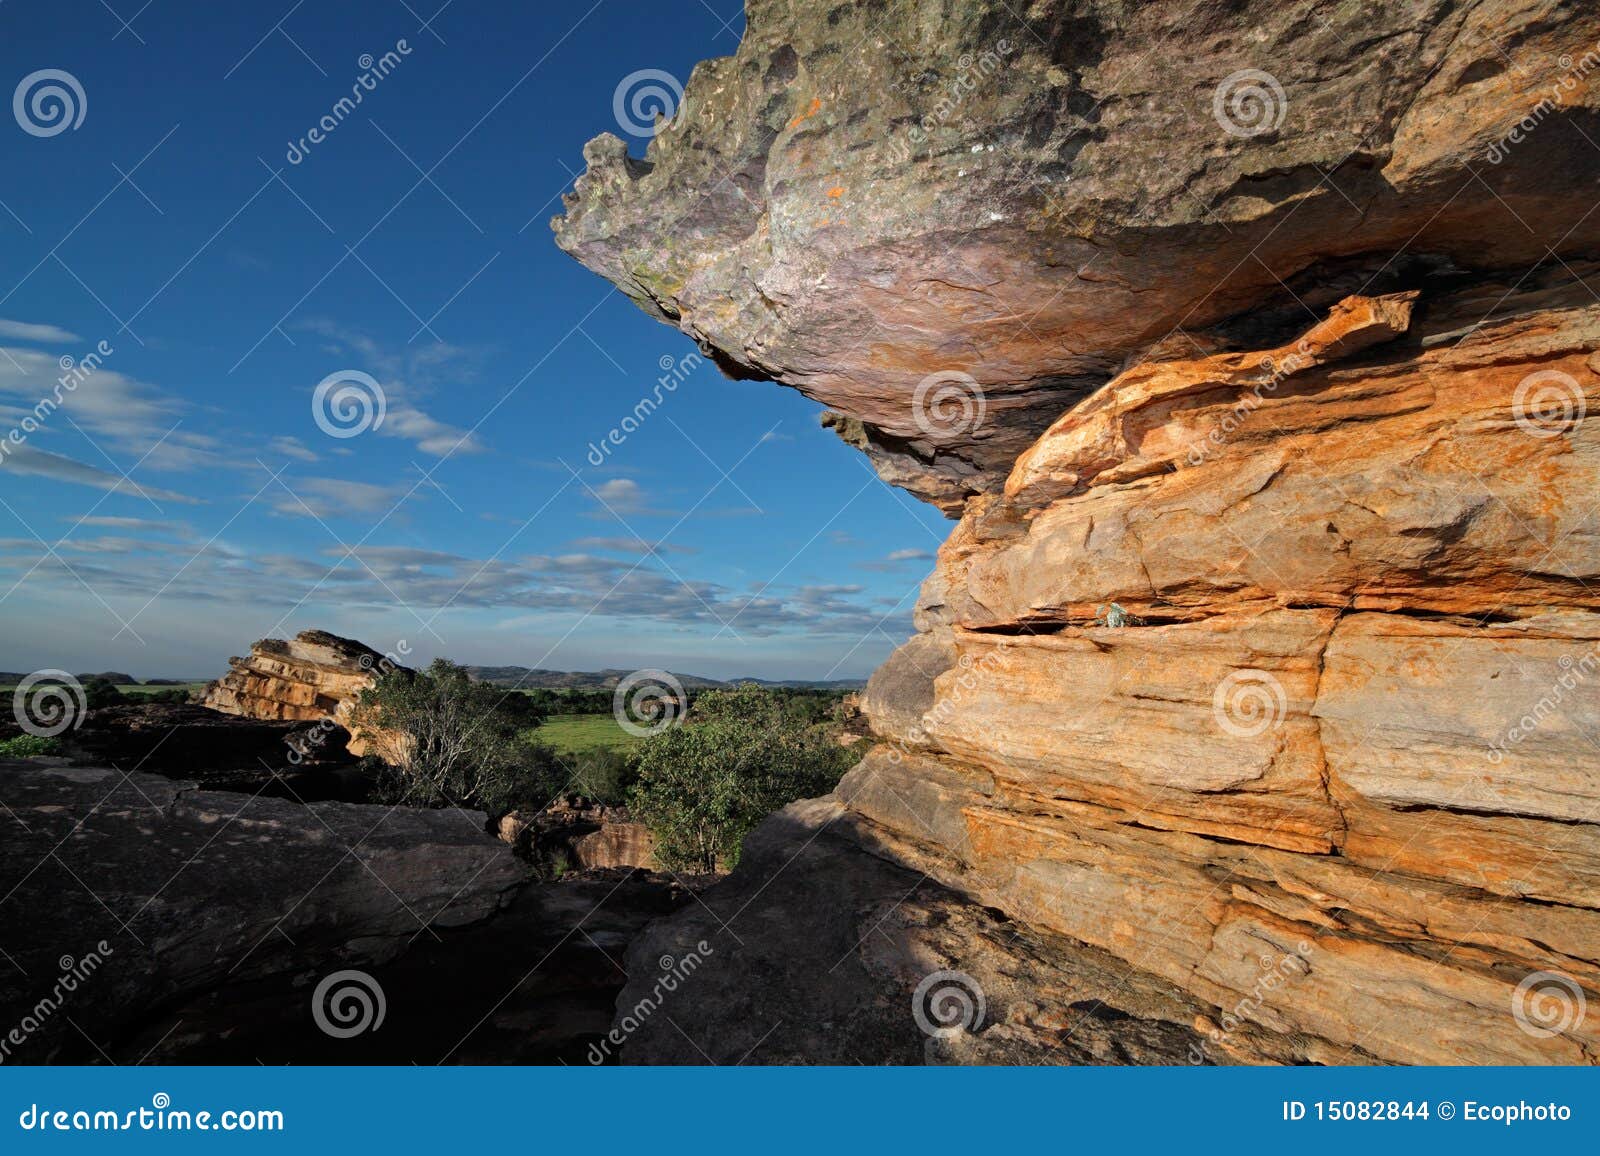 sandstone rock, ubirr